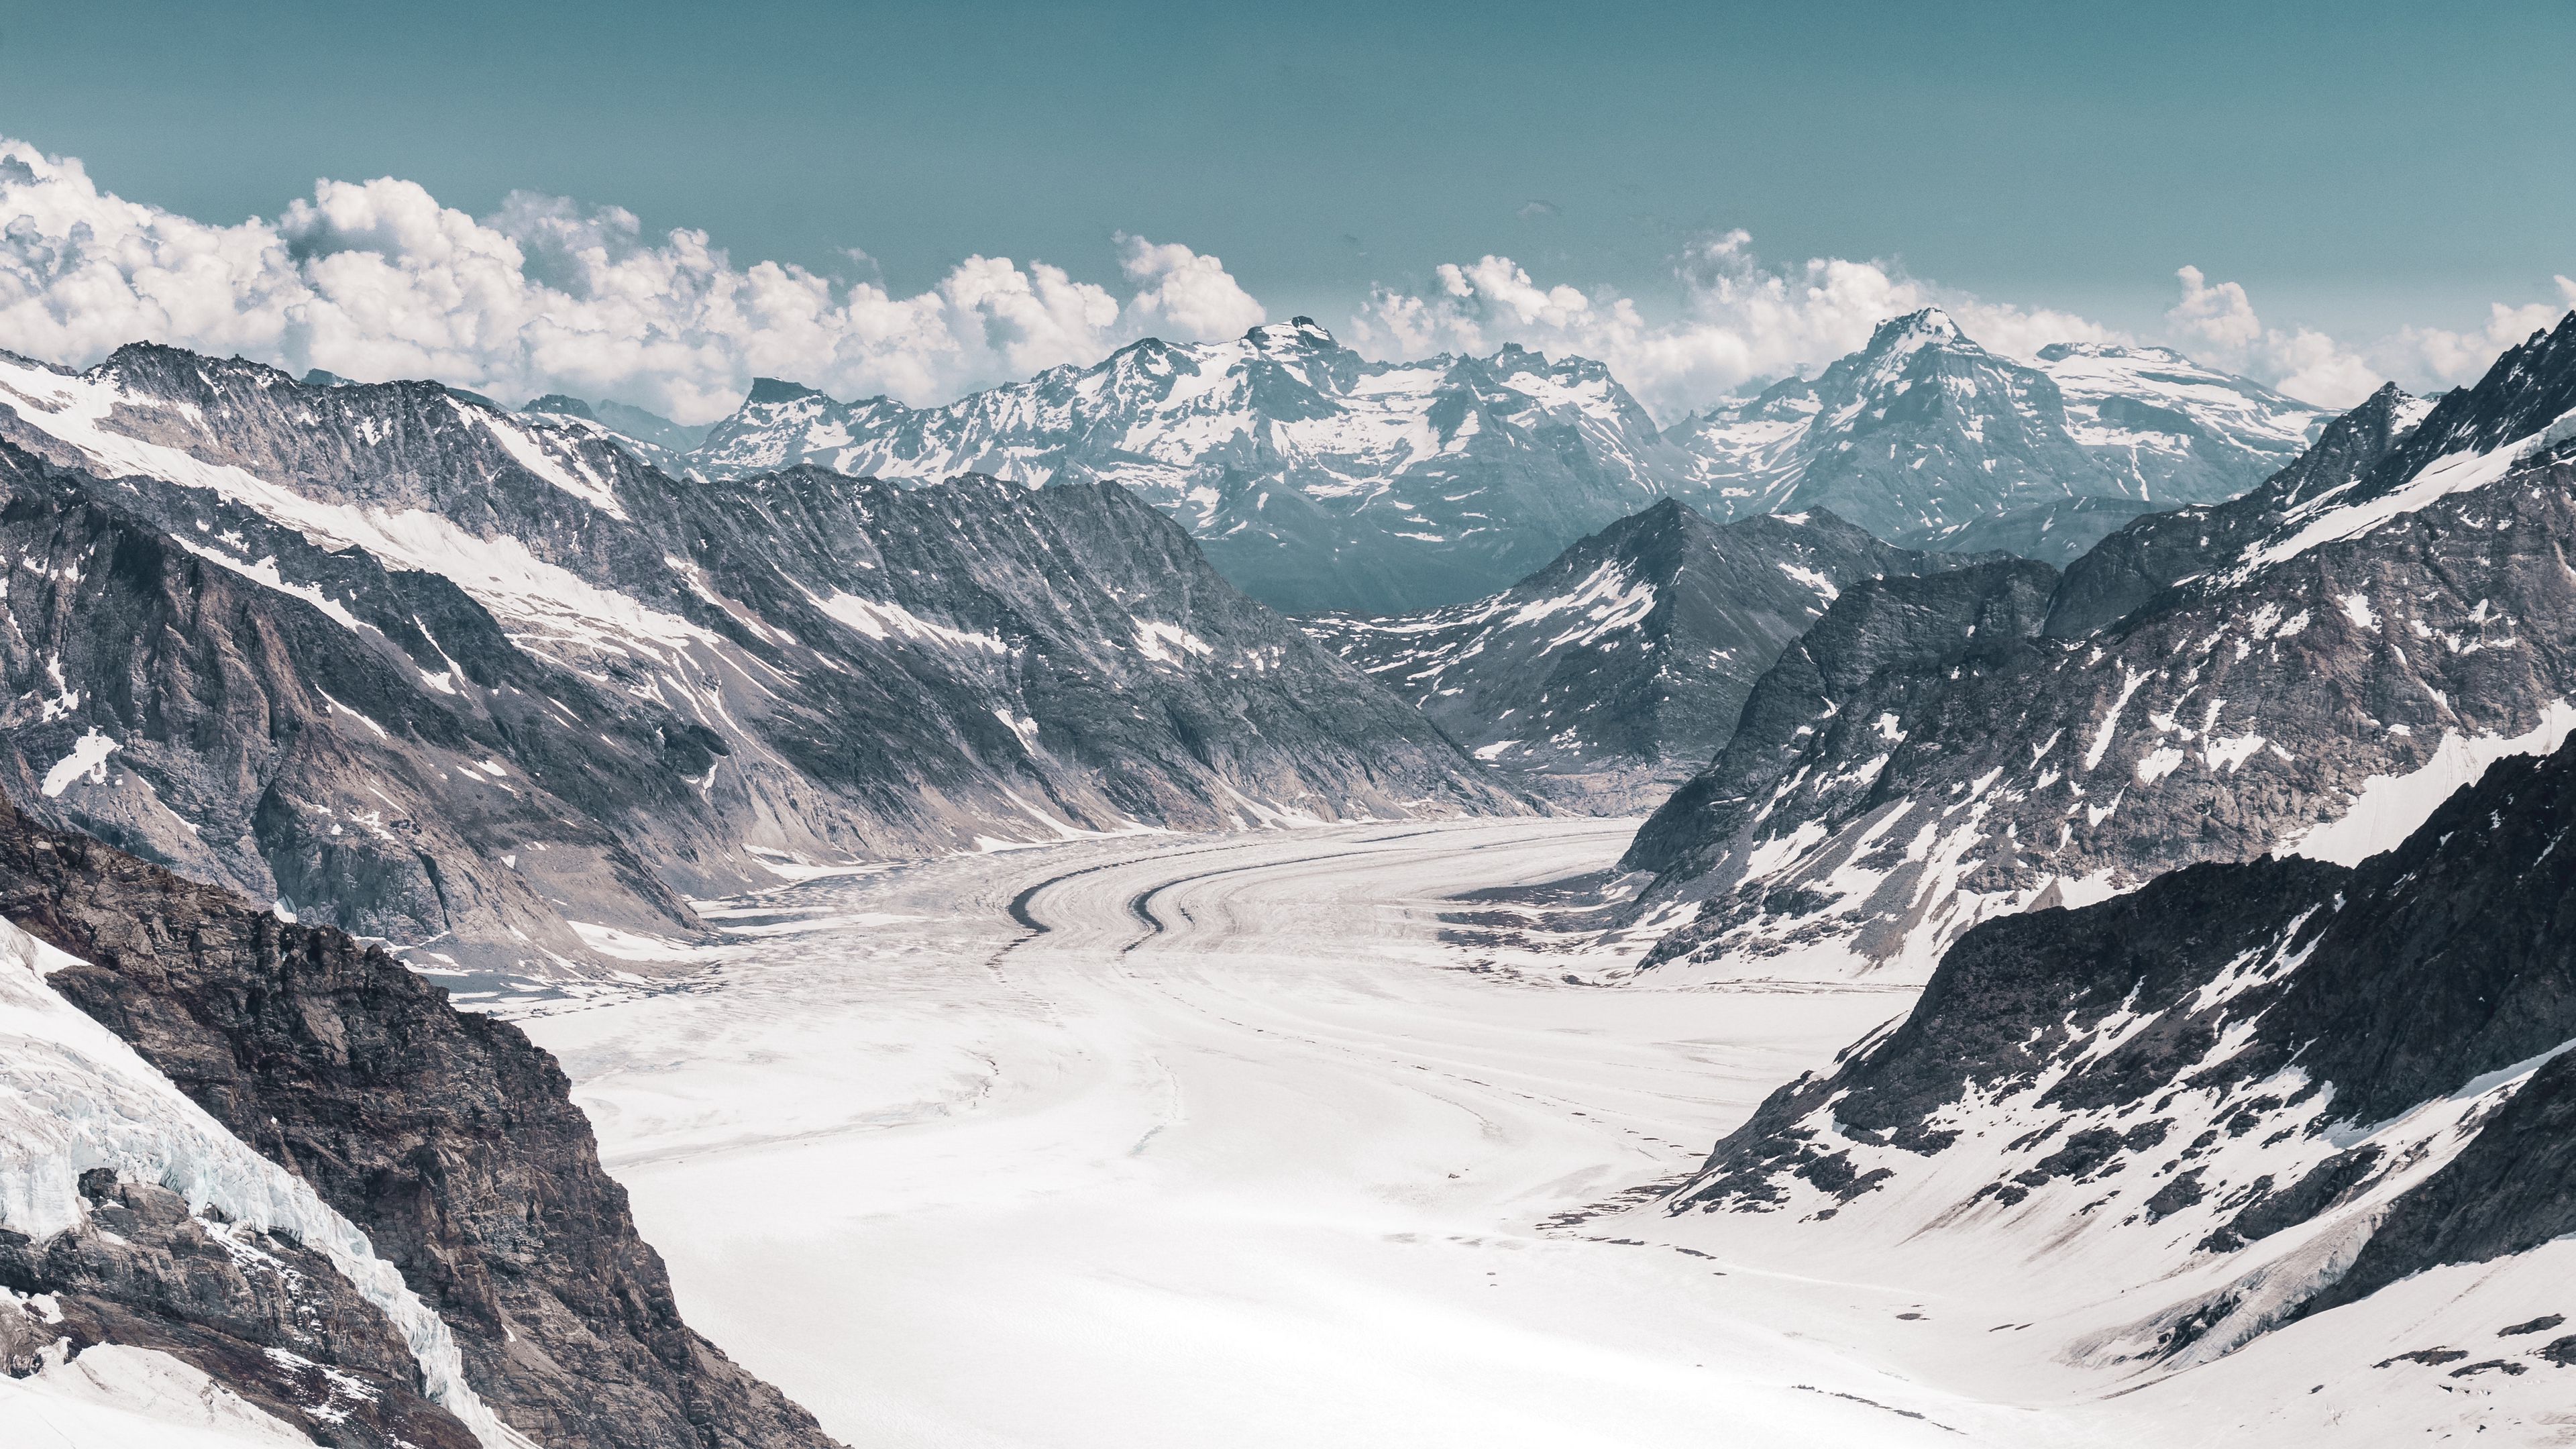 Download wallpaper 3840x2160 glacier, mountains, snow, peaks, aletsch  glacier, switzerland 4k uhd 16:9 hd background